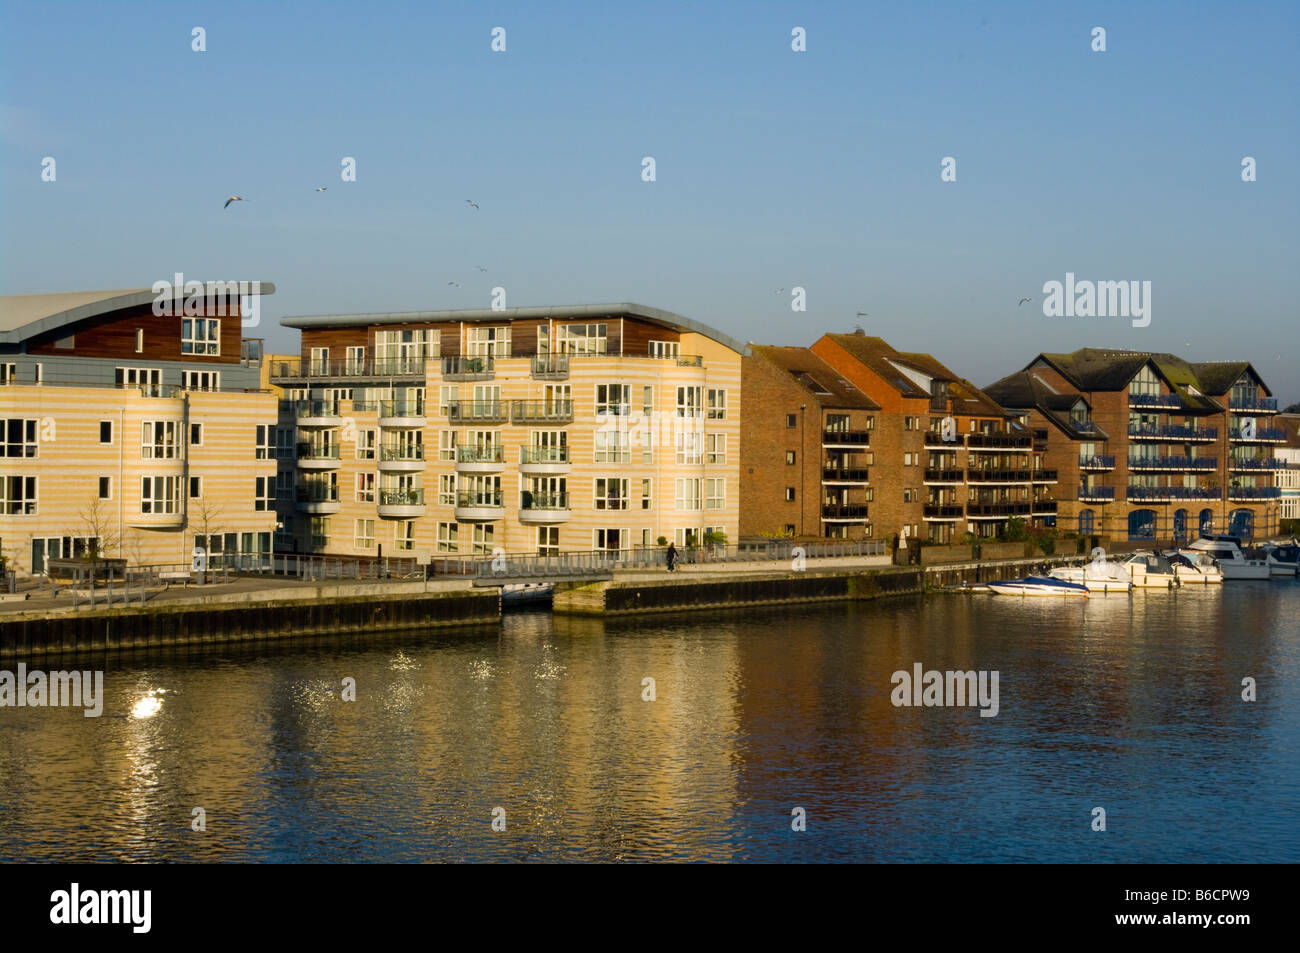 The River Thames By modern Riverside waterfront Apartments Hampton Wick Stock Photo